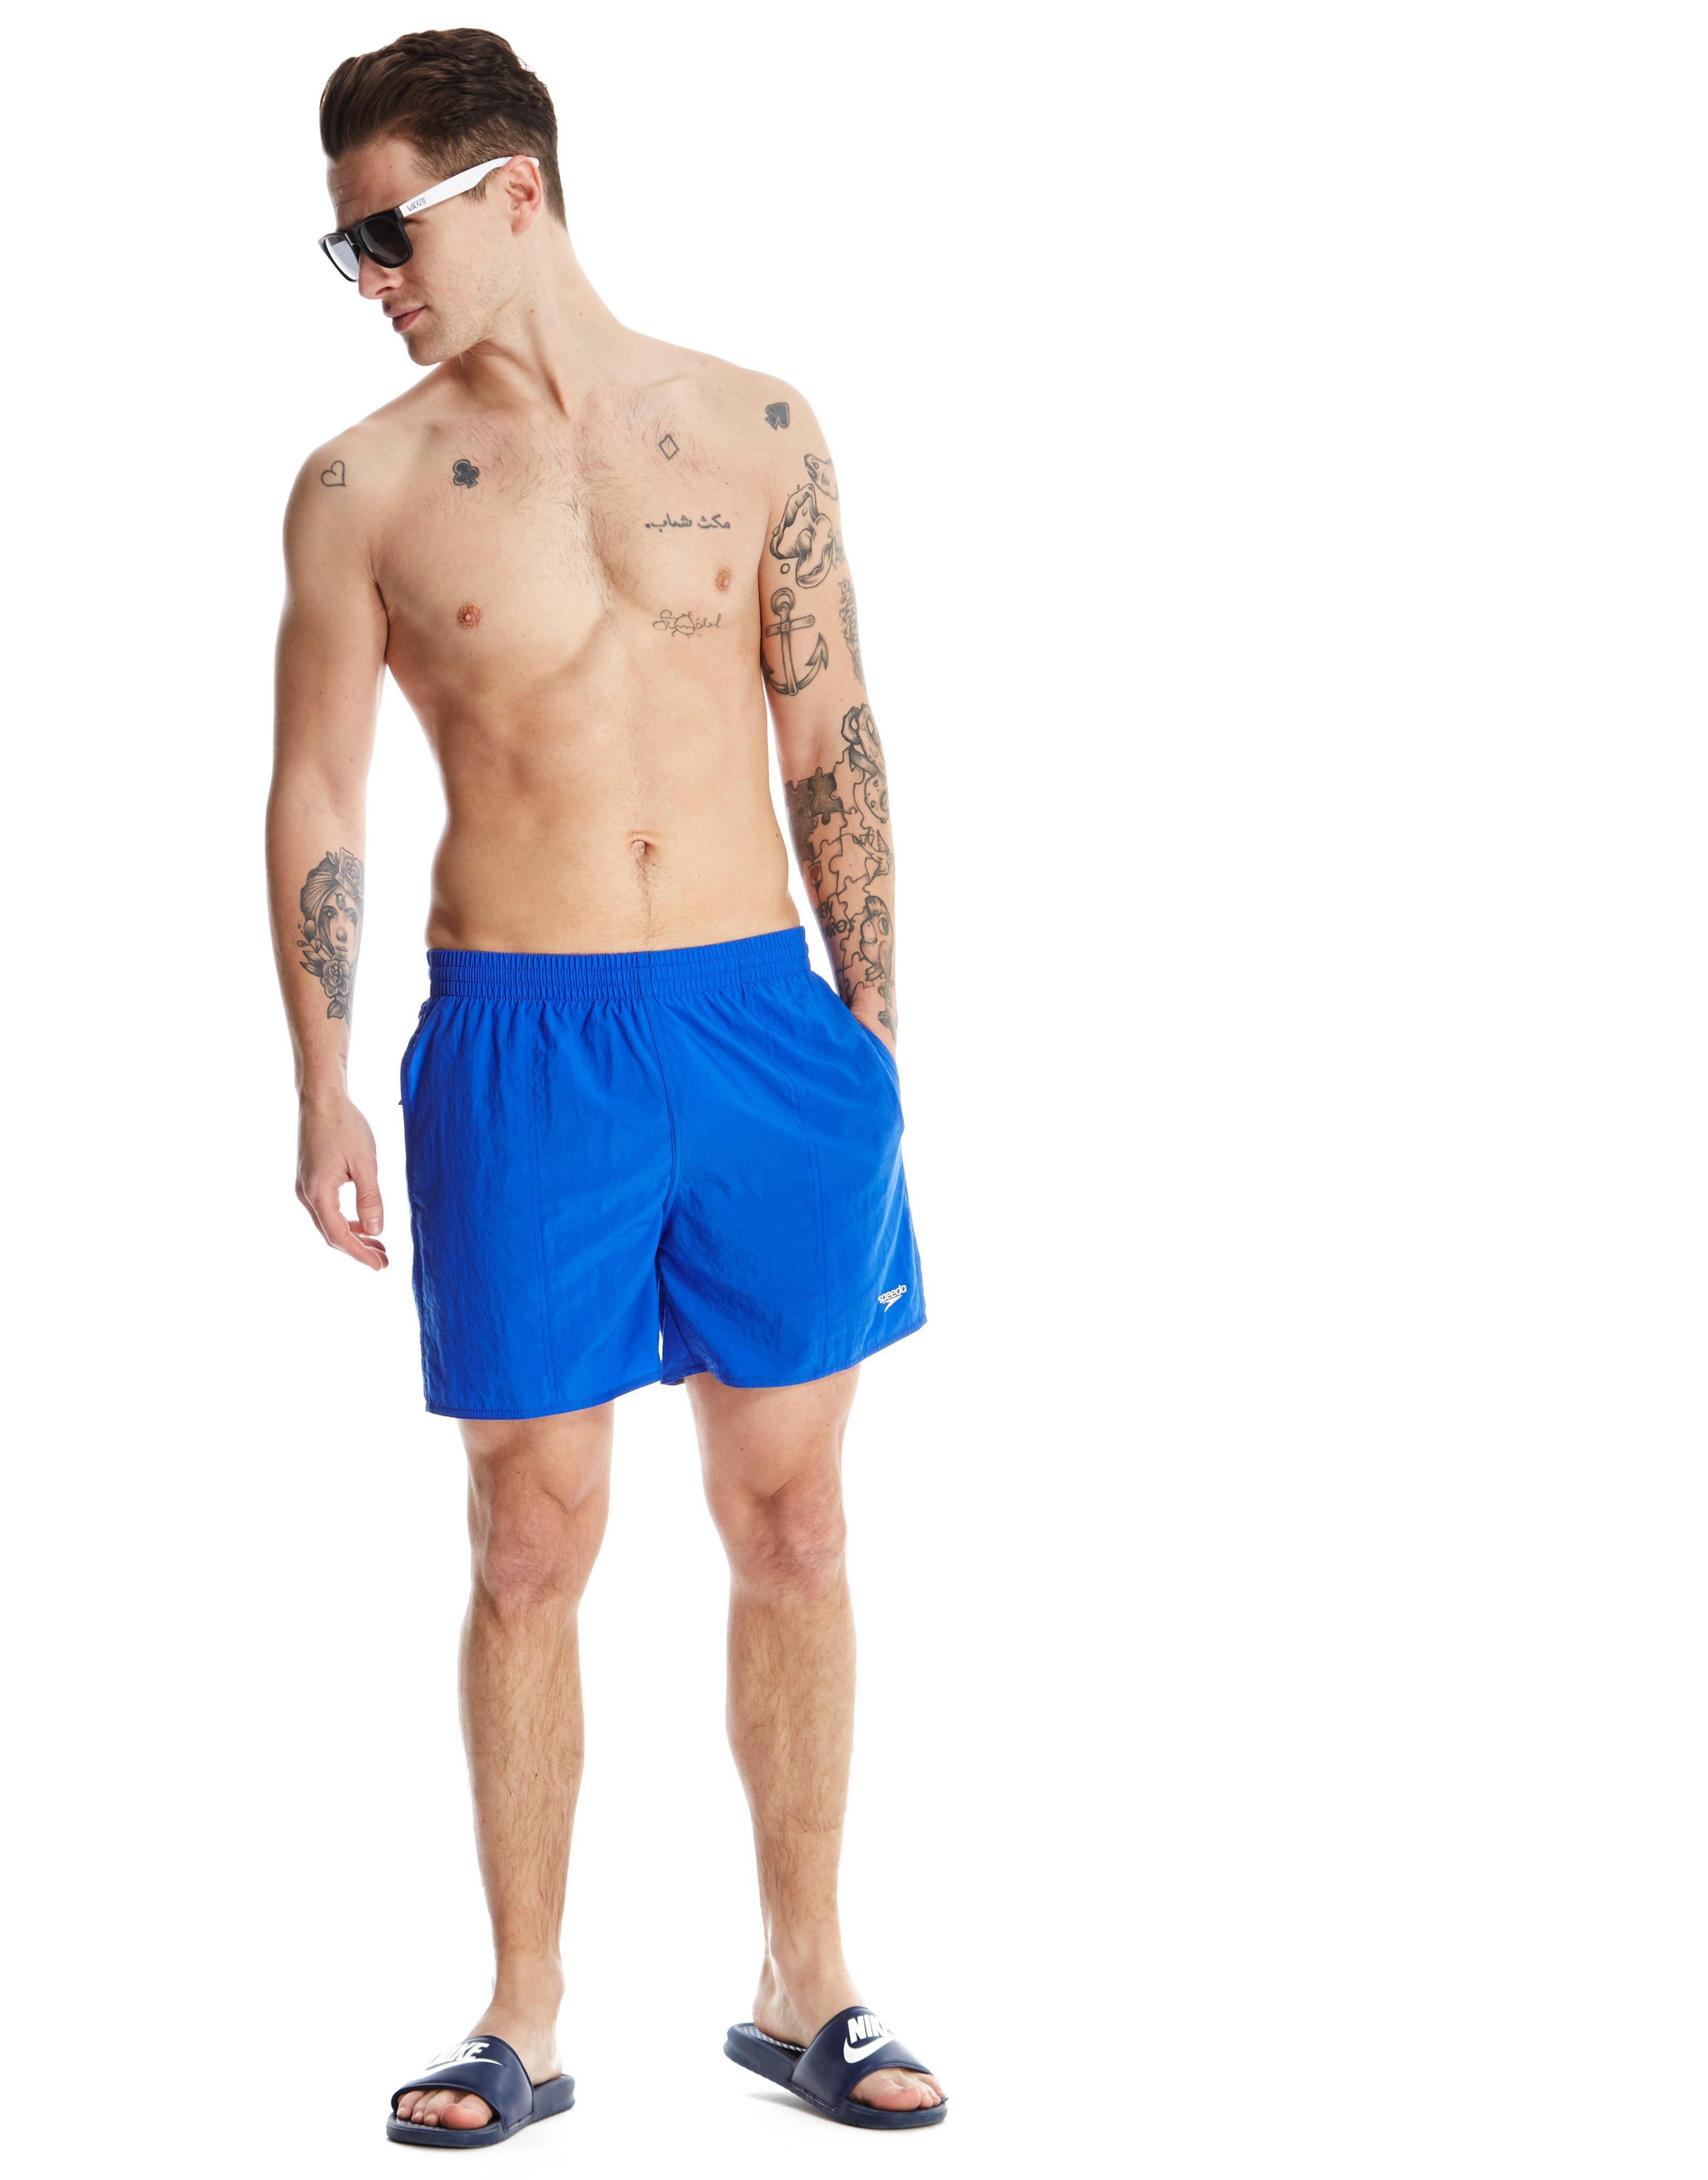 Lyst - Speedo Solid Leisure Swim Short in Blue for Men